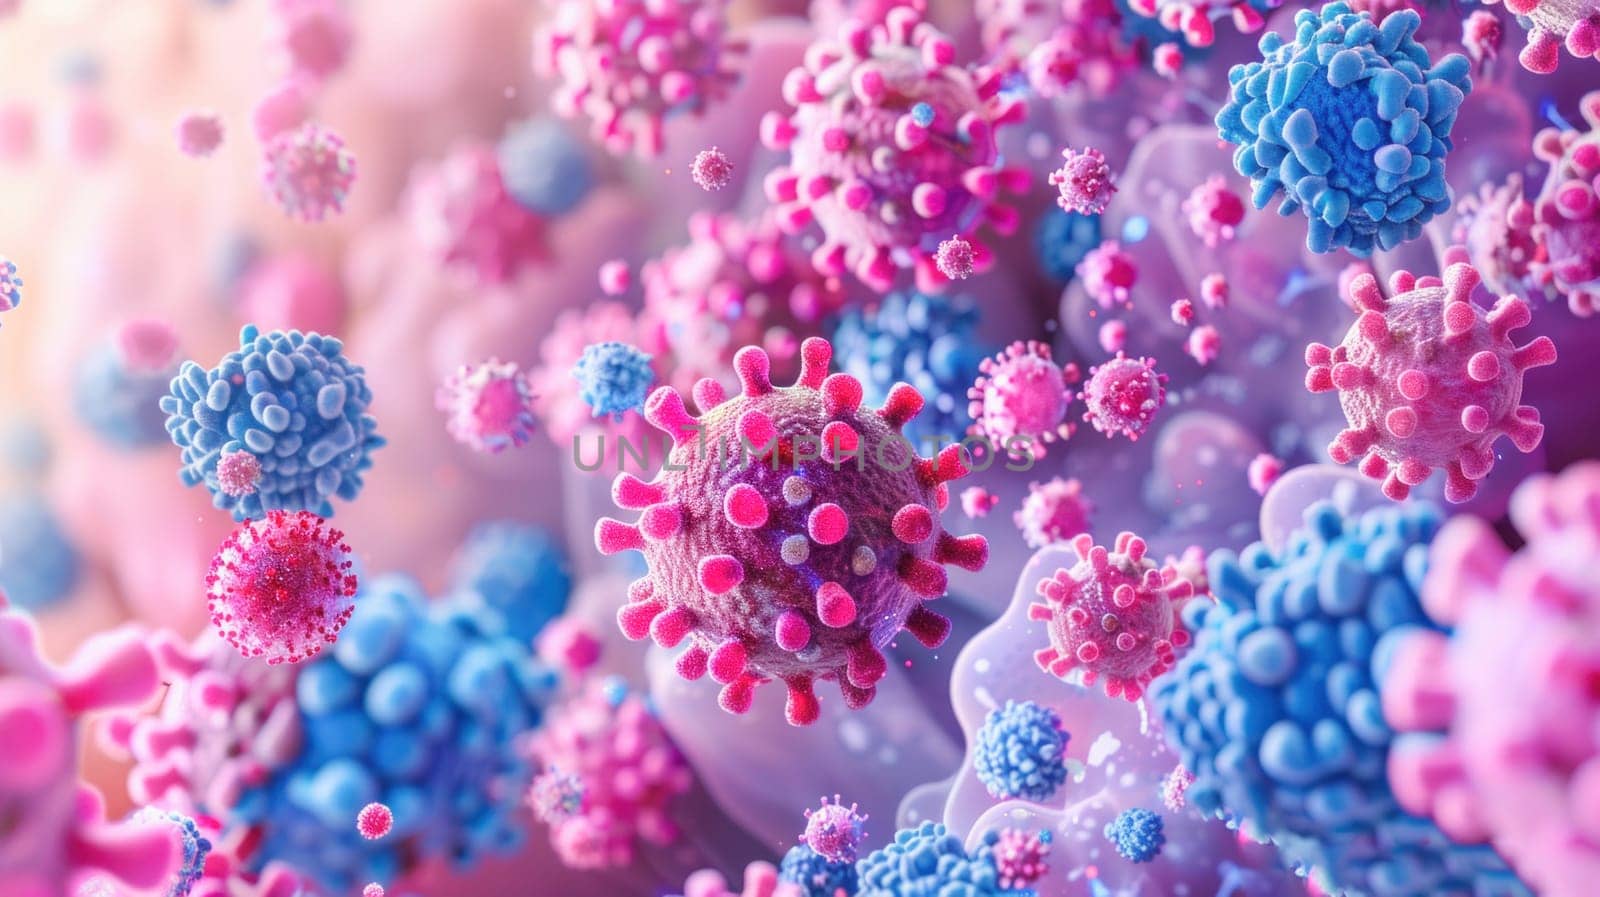 Digital artwork of pink and blue virus with keywords Flower, Plant, Creative arts, Pink, Art, Flowering plant